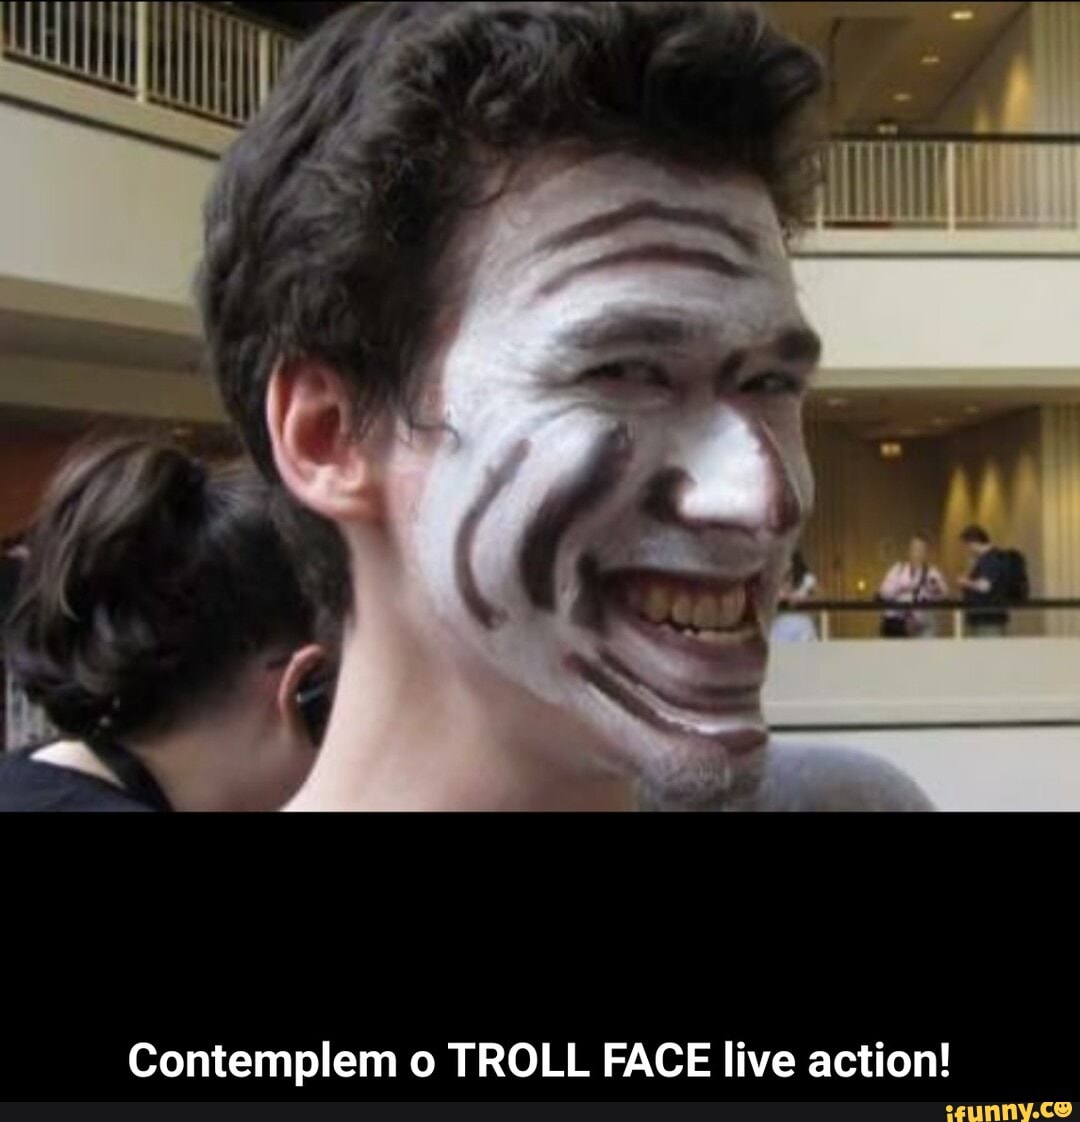 oh really troll face